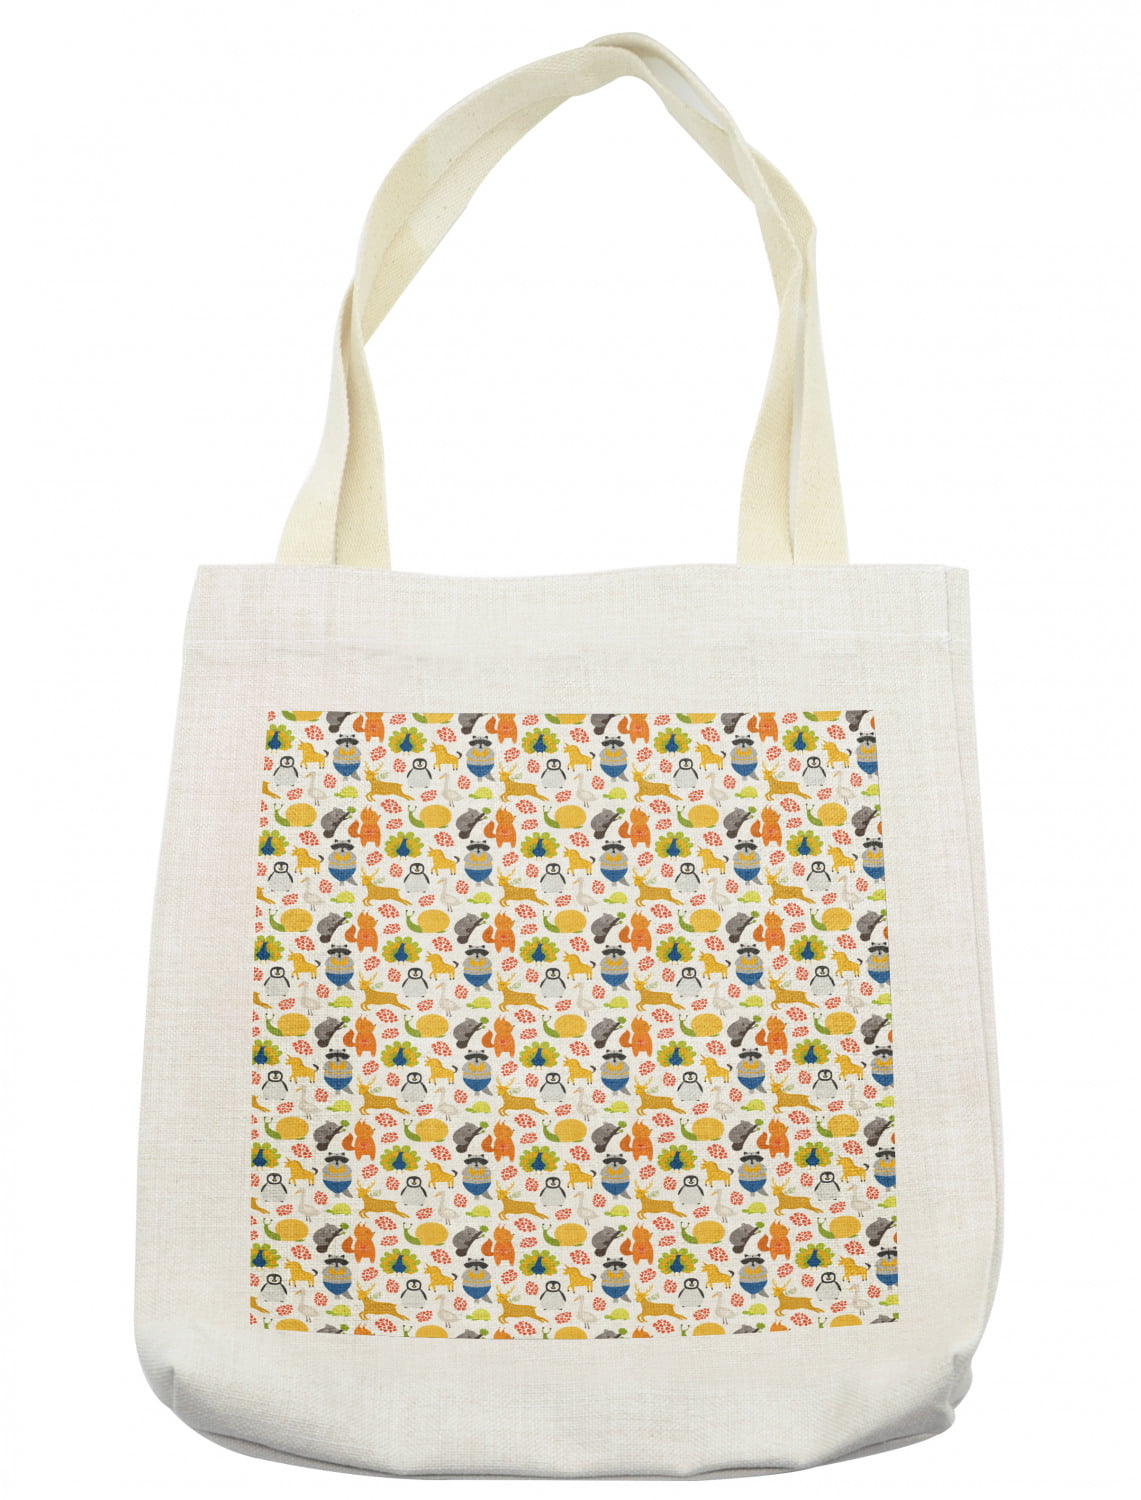 Cotton tote bag Handmade TOTE BAG Shopping Bag Geese design Fish design Coastal theme.